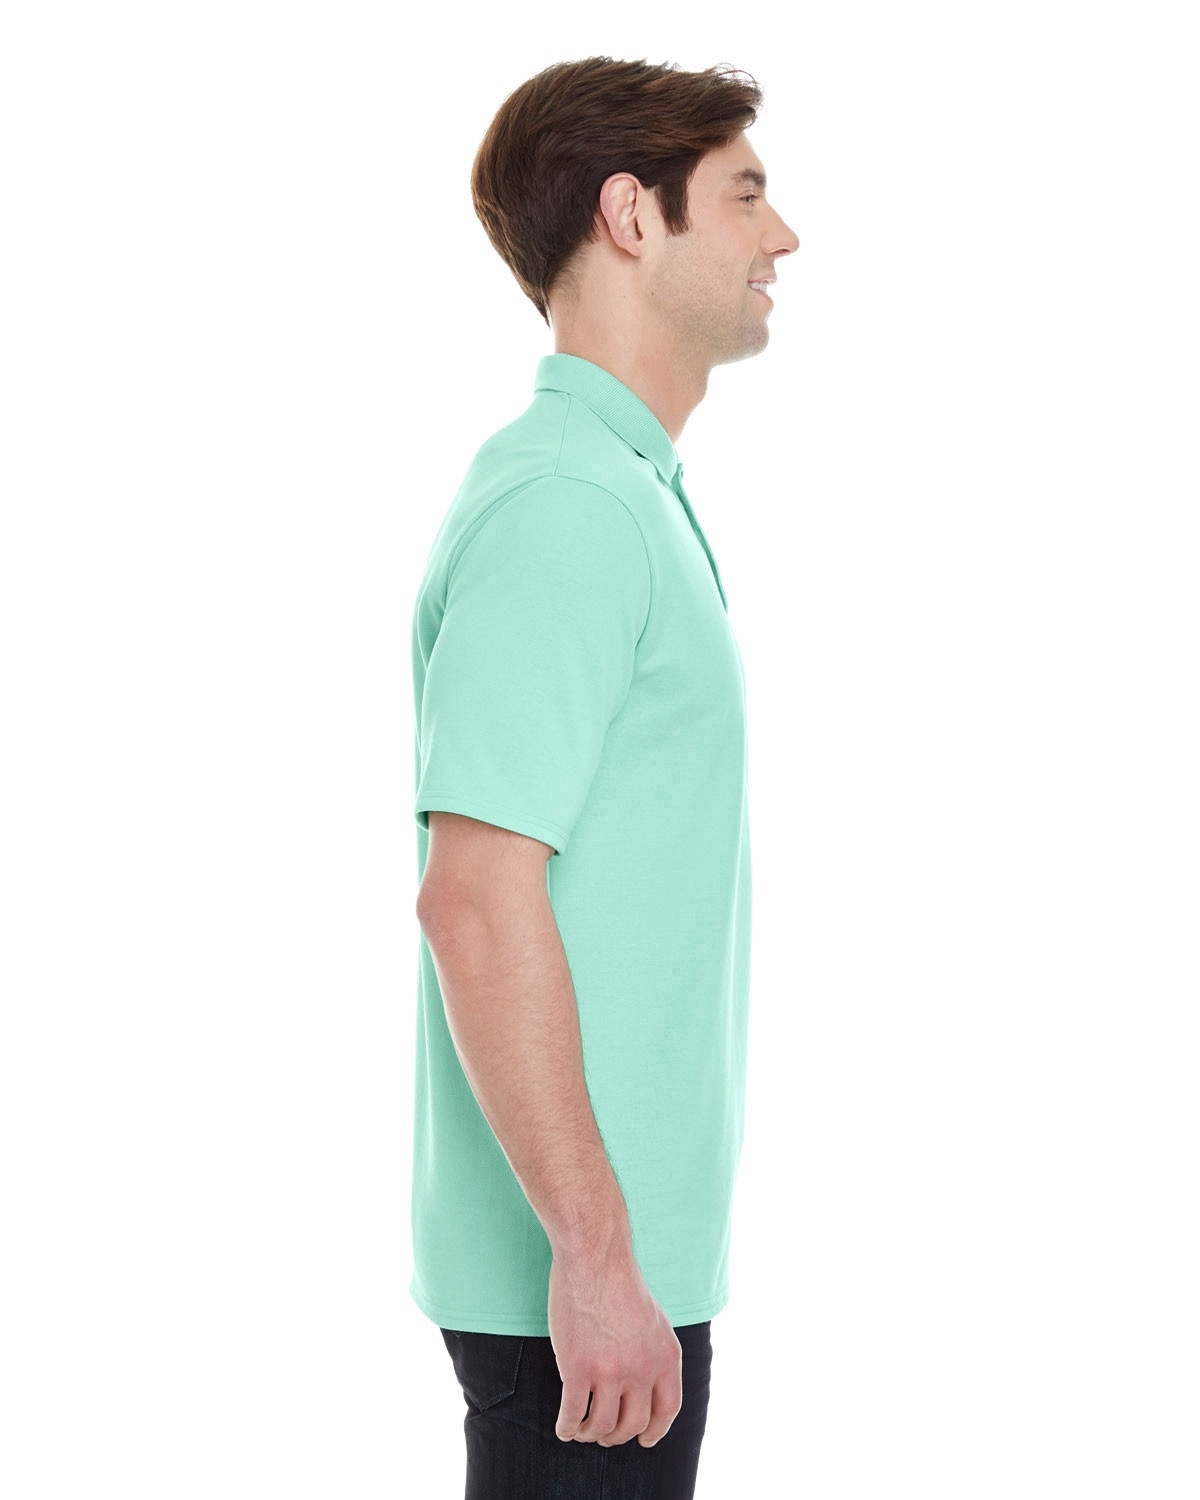 Hanes Men's X-Temp Performance Pique Polo Short Sleeve Shirt - Black L